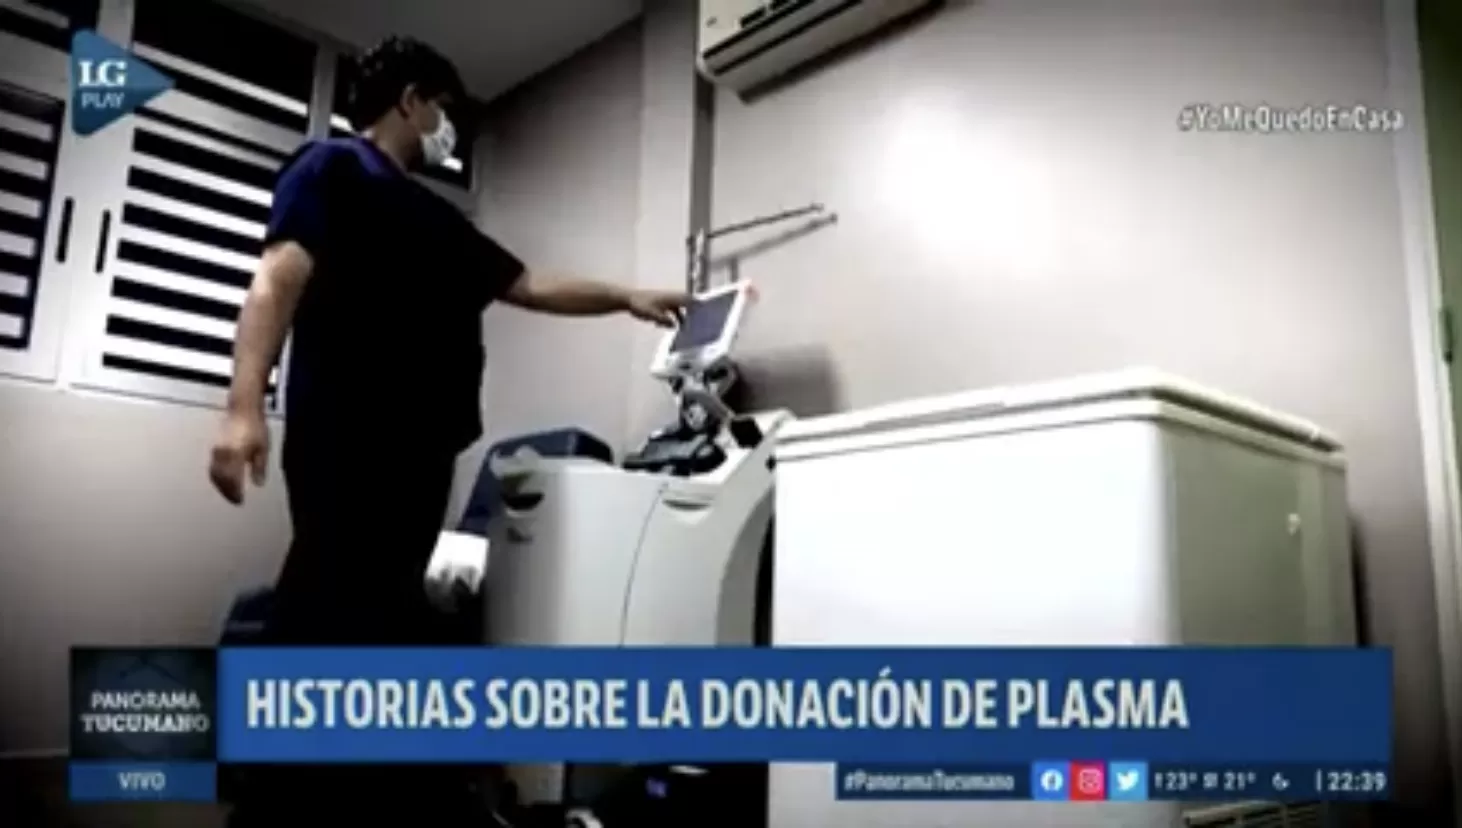 SOLIDARIDAD. Muchos tucumanos se acercaron a donar plasma, a partir de pedidos que circularon por redes sociales.